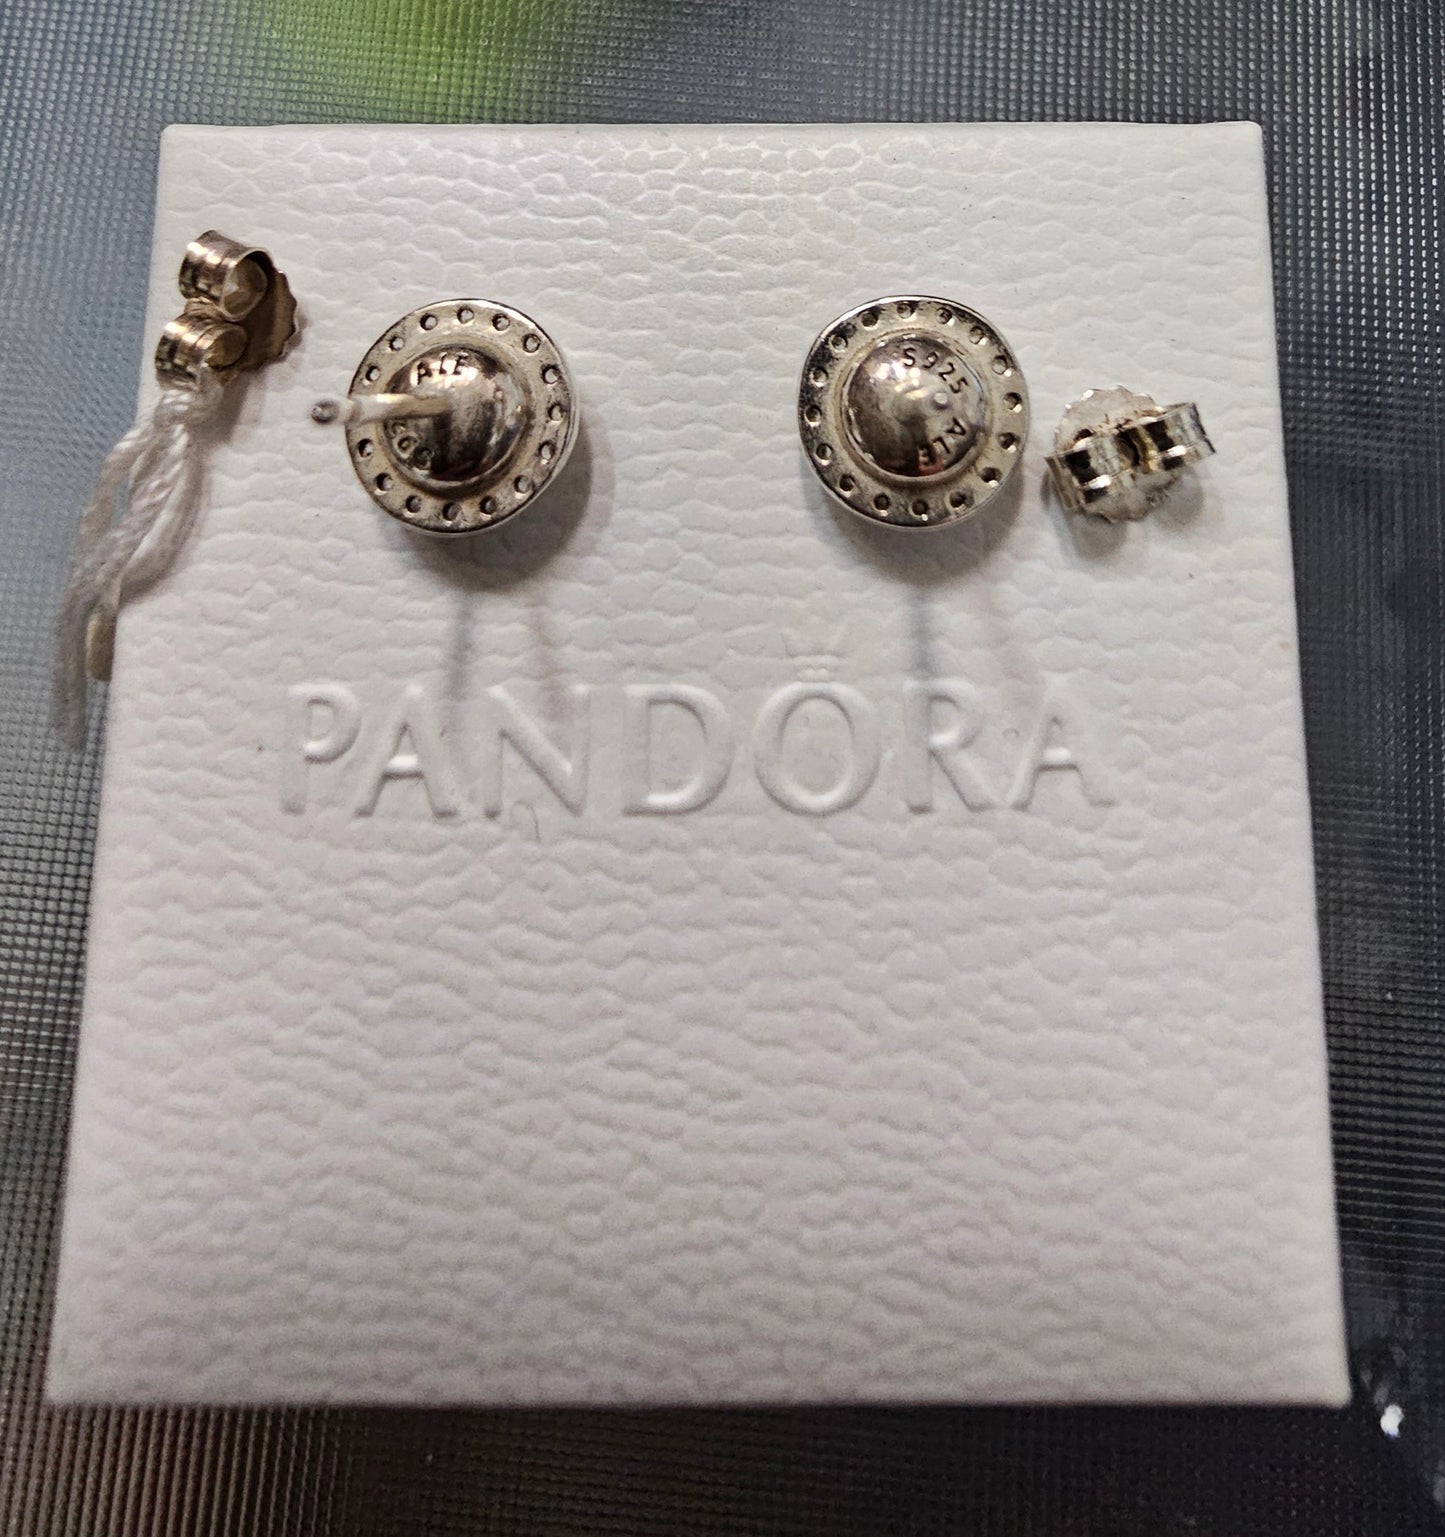 Pandora stud earring